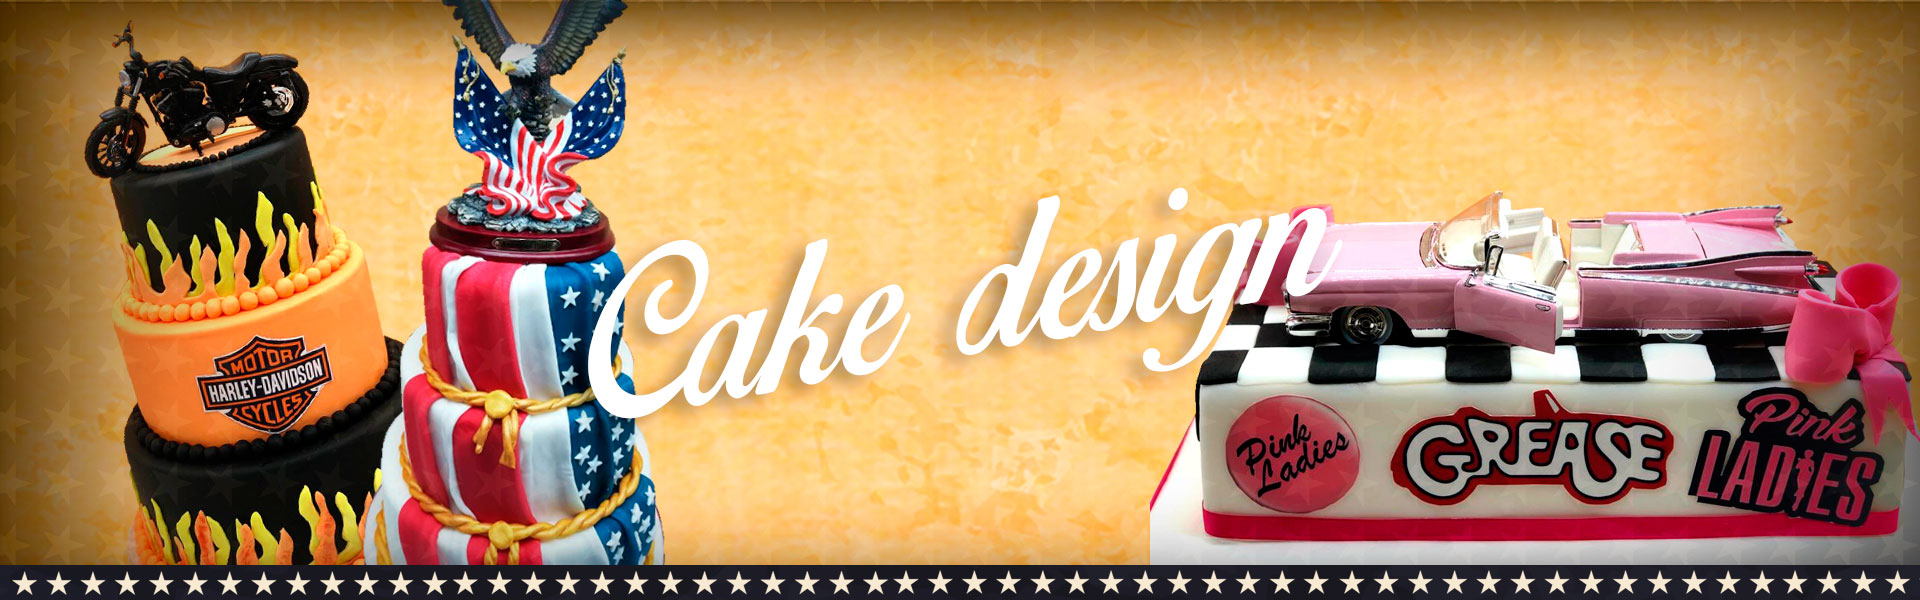 Header_cake_design